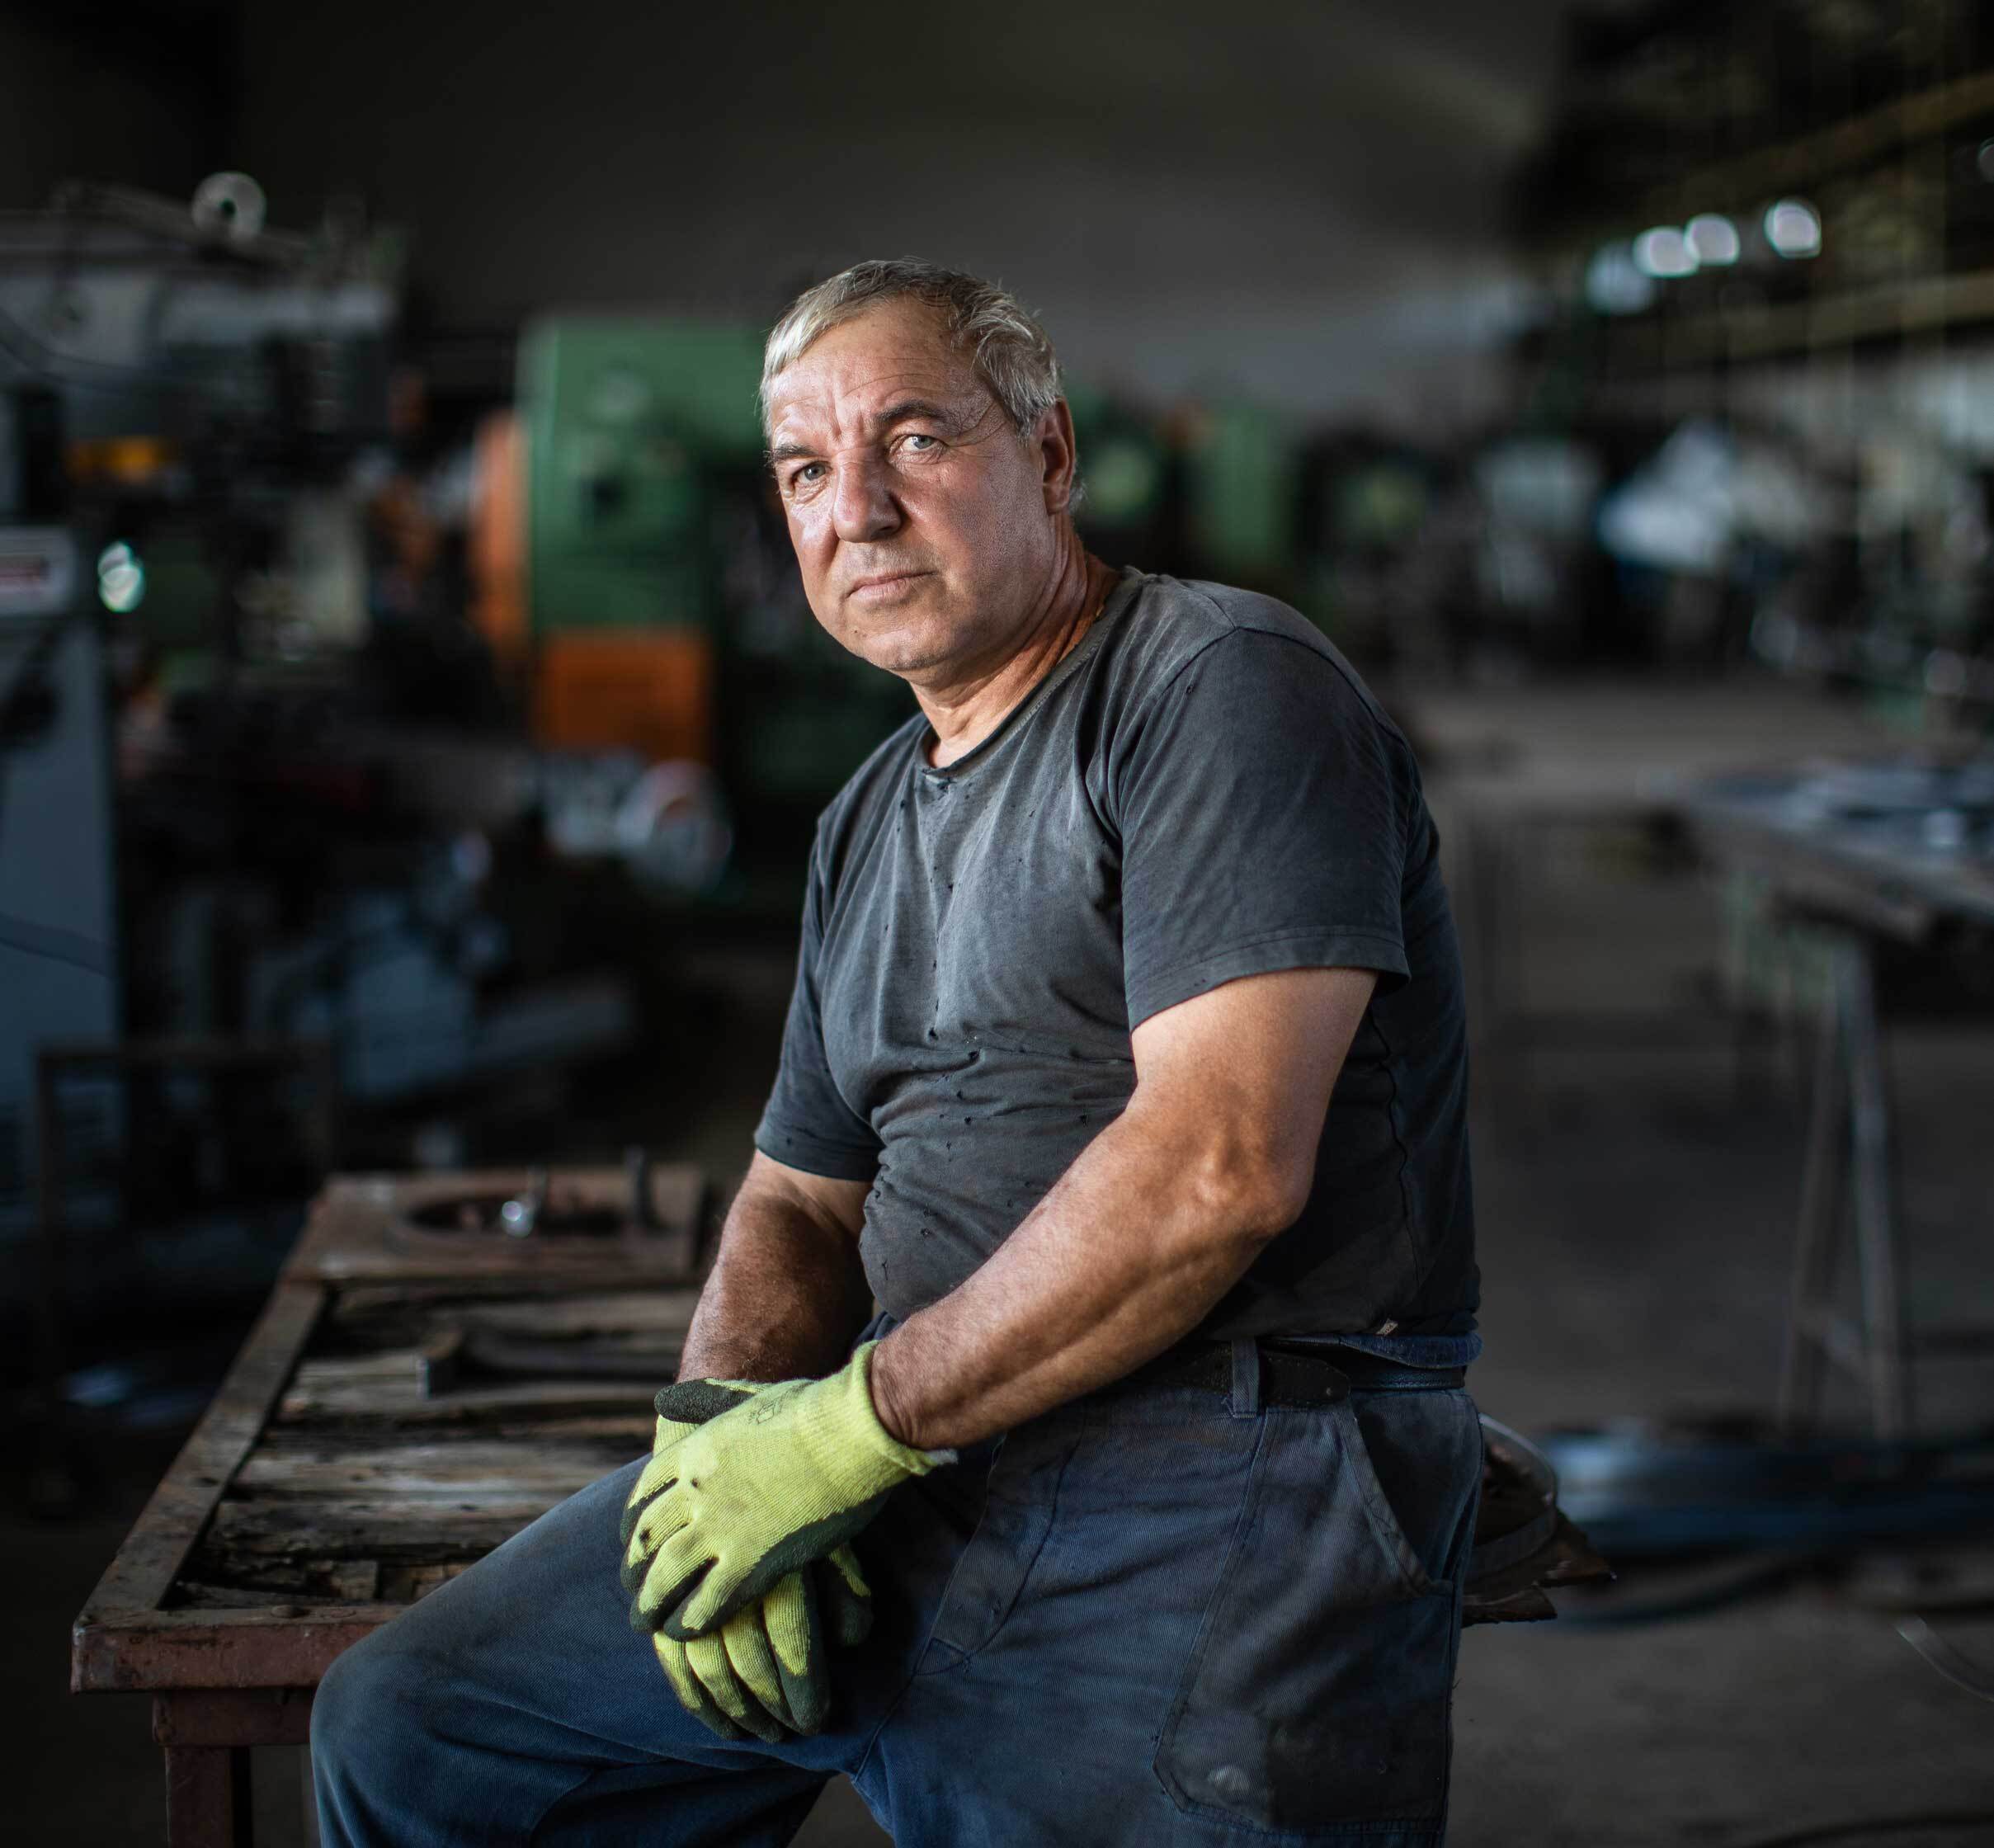 Image of a man at a factory.